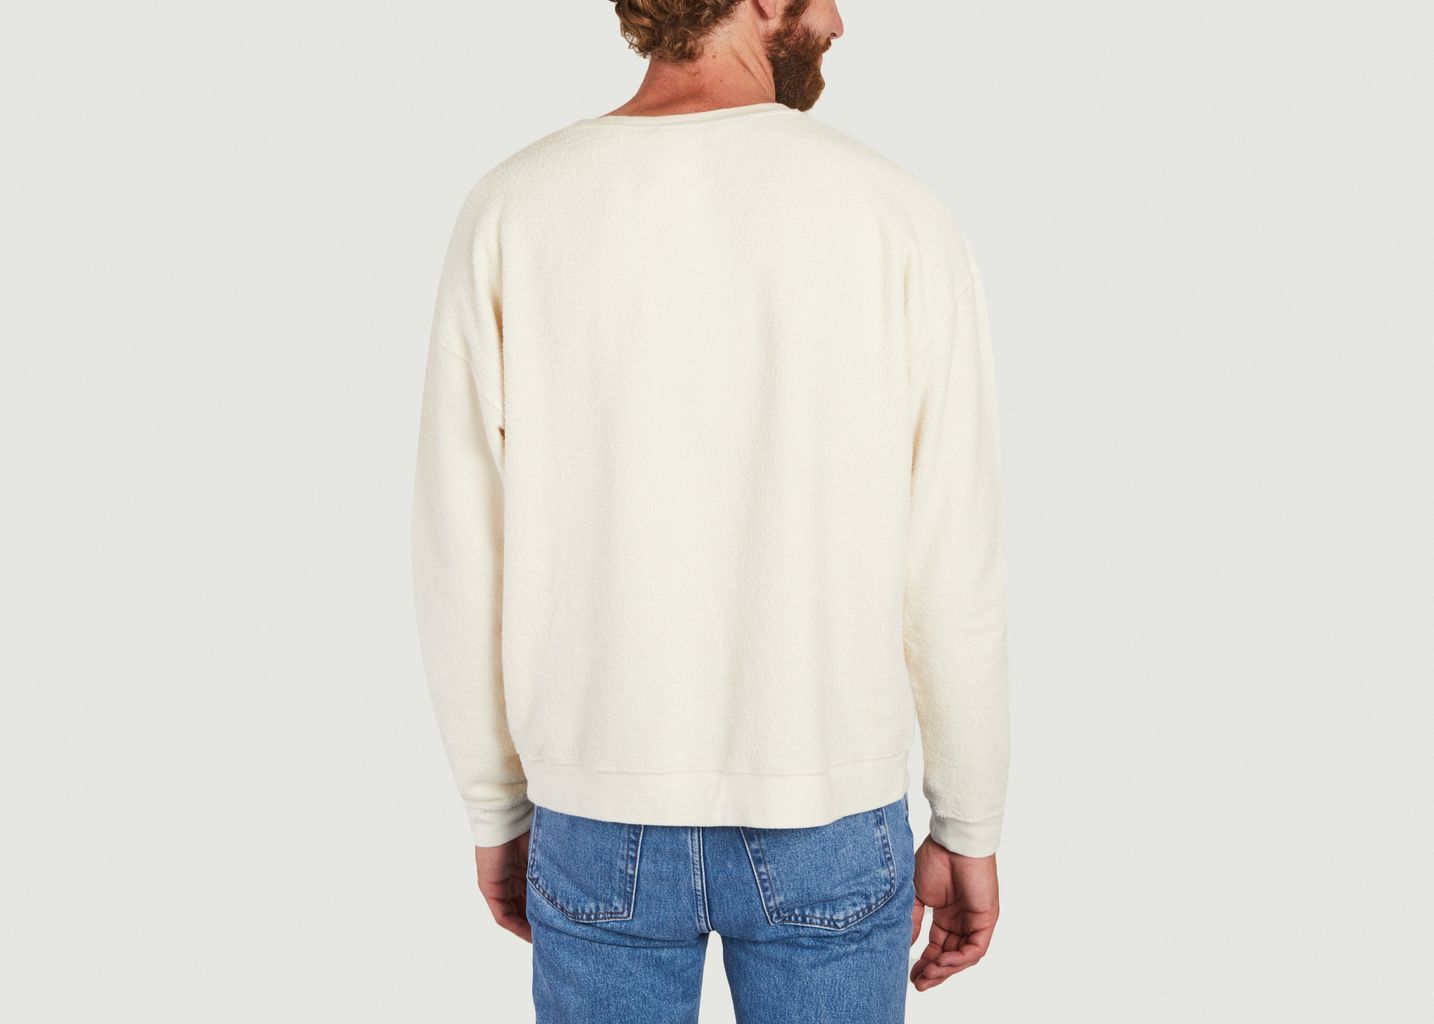 Bobypark sweatshirt in organic cotton - American Vintage